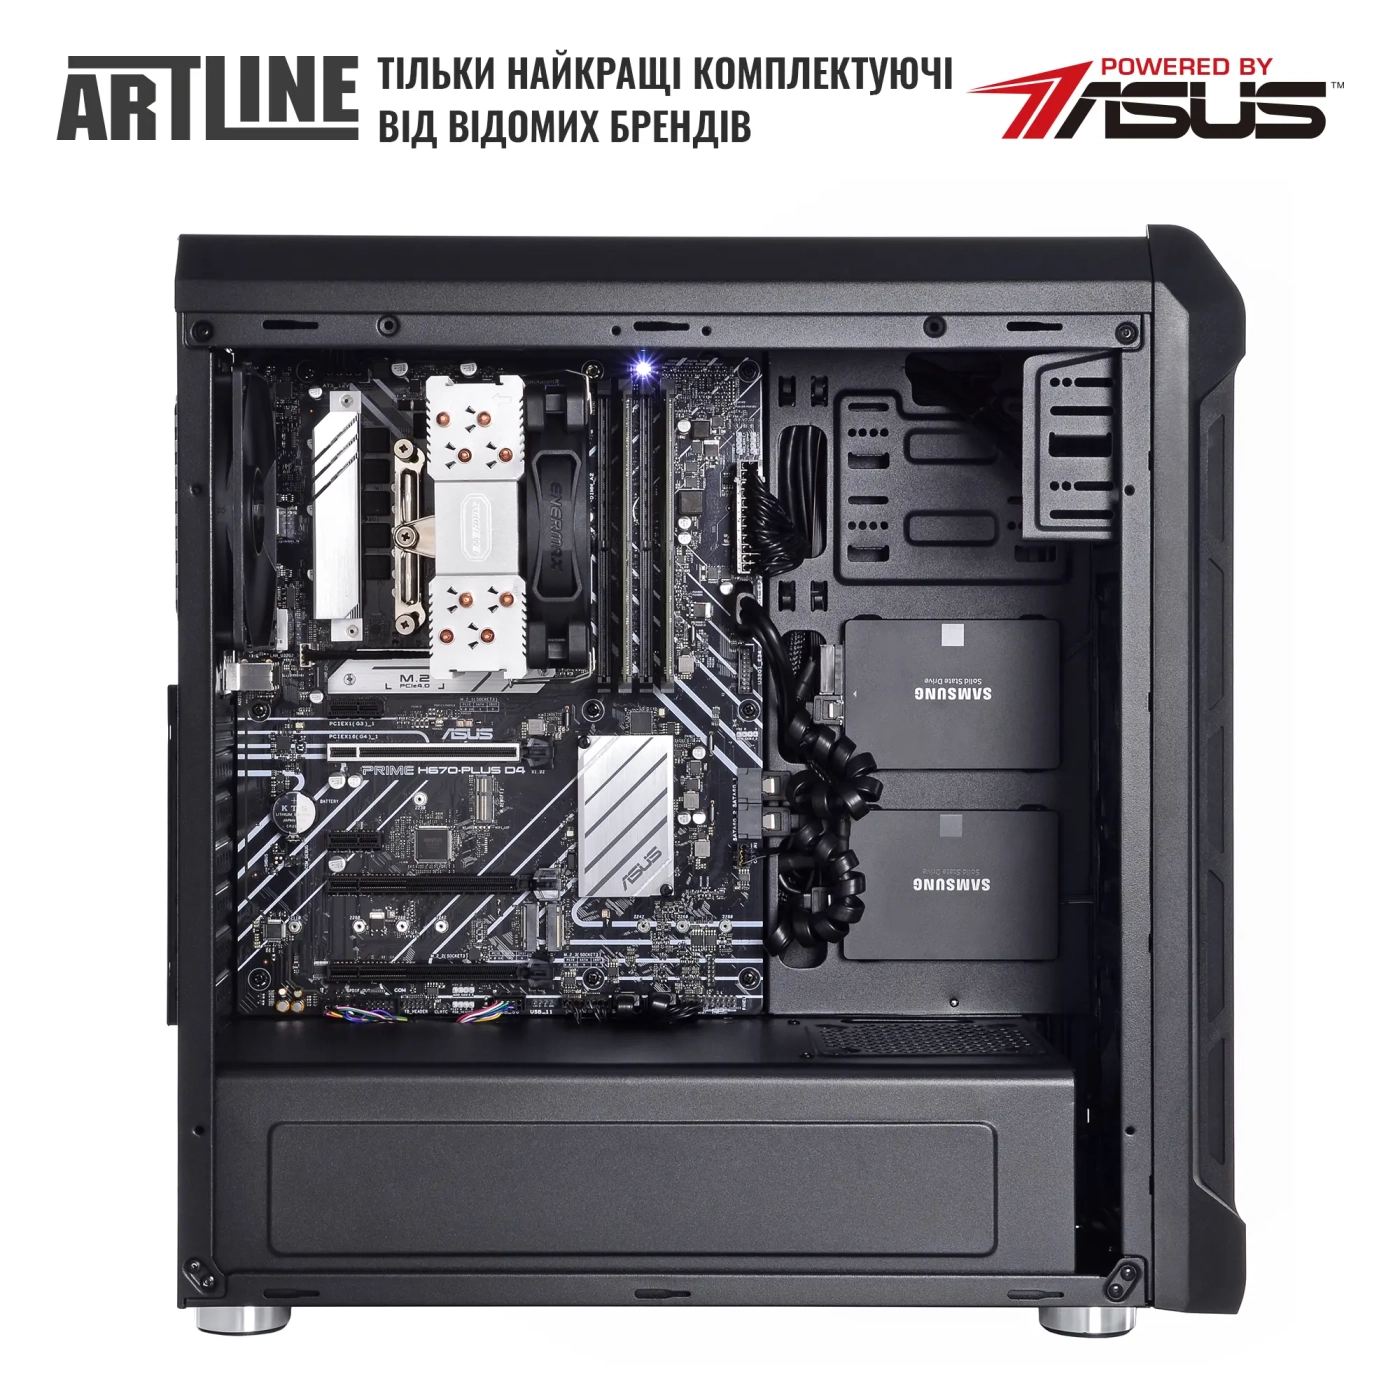 Купити Сервер ARTLINE Business T27 (T27v40) - фото 4